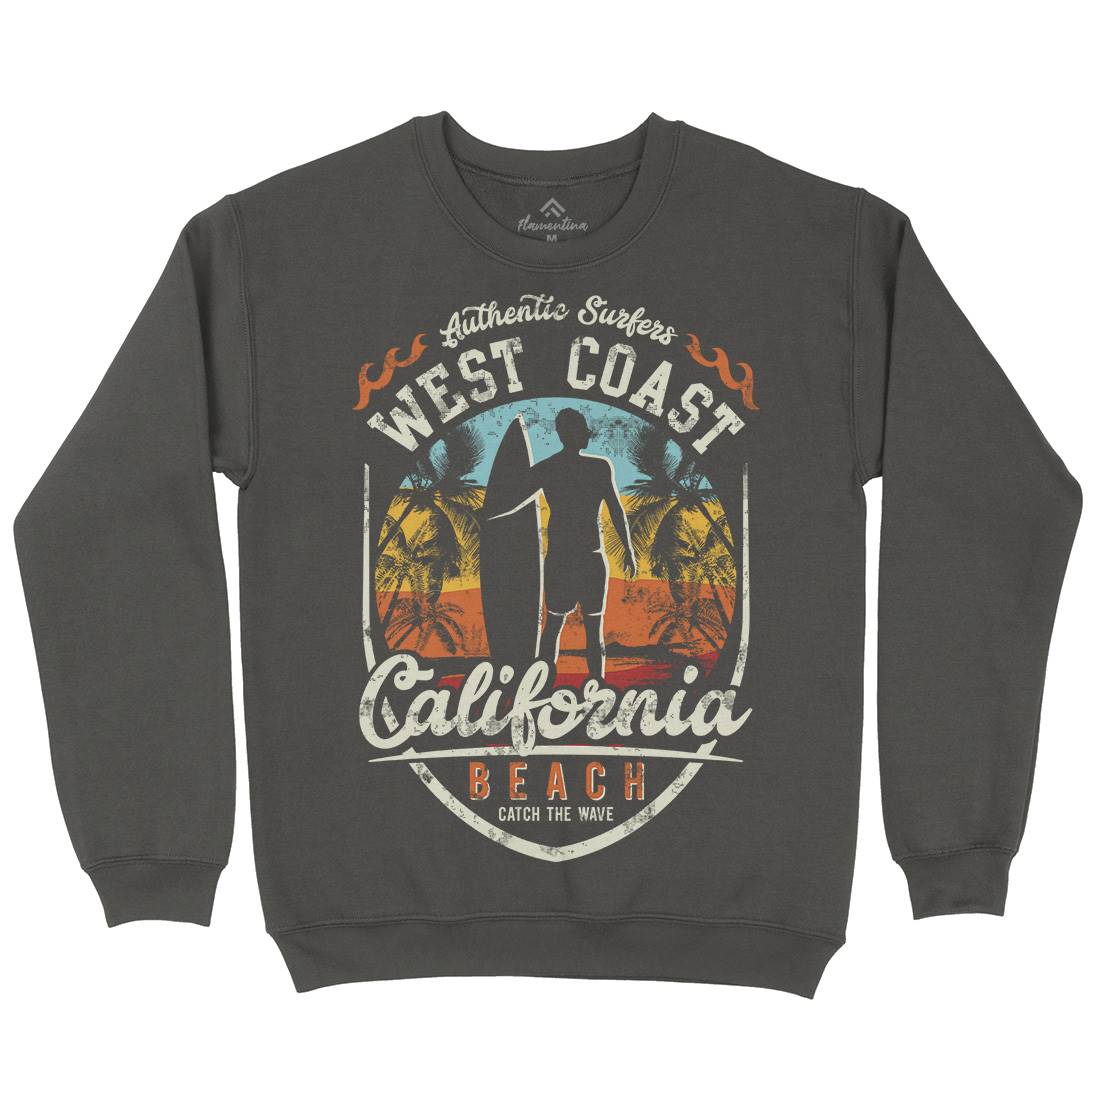 West Coast California Beach Kids Crew Neck Sweatshirt Holiday D095